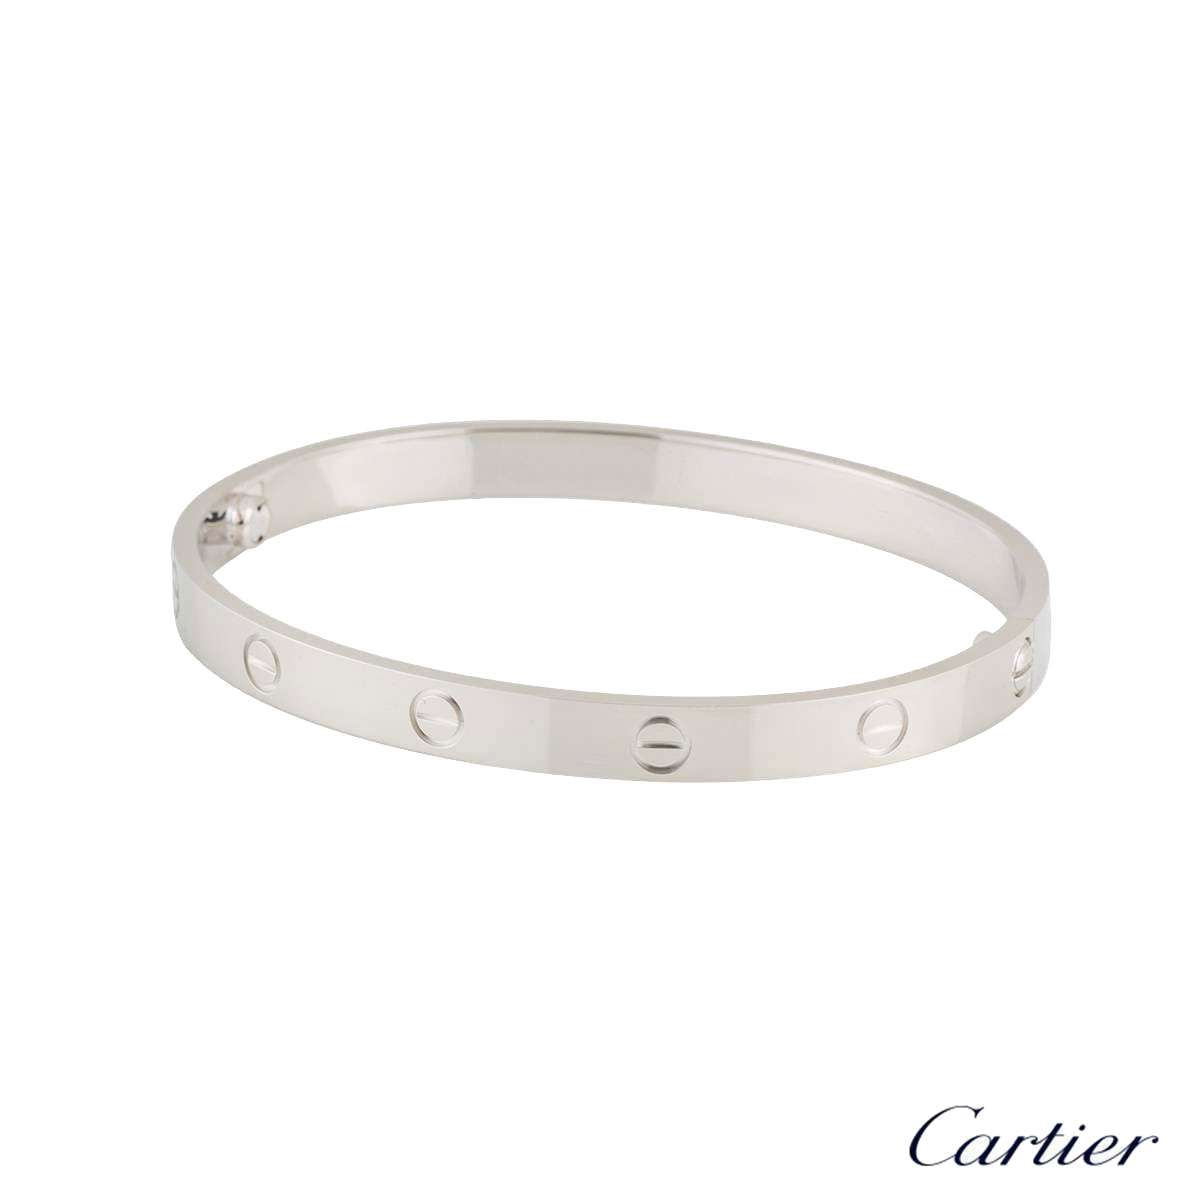 Cartier White Gold Plain Love Bracelet Size 19 B6035419 | Rich Diamonds